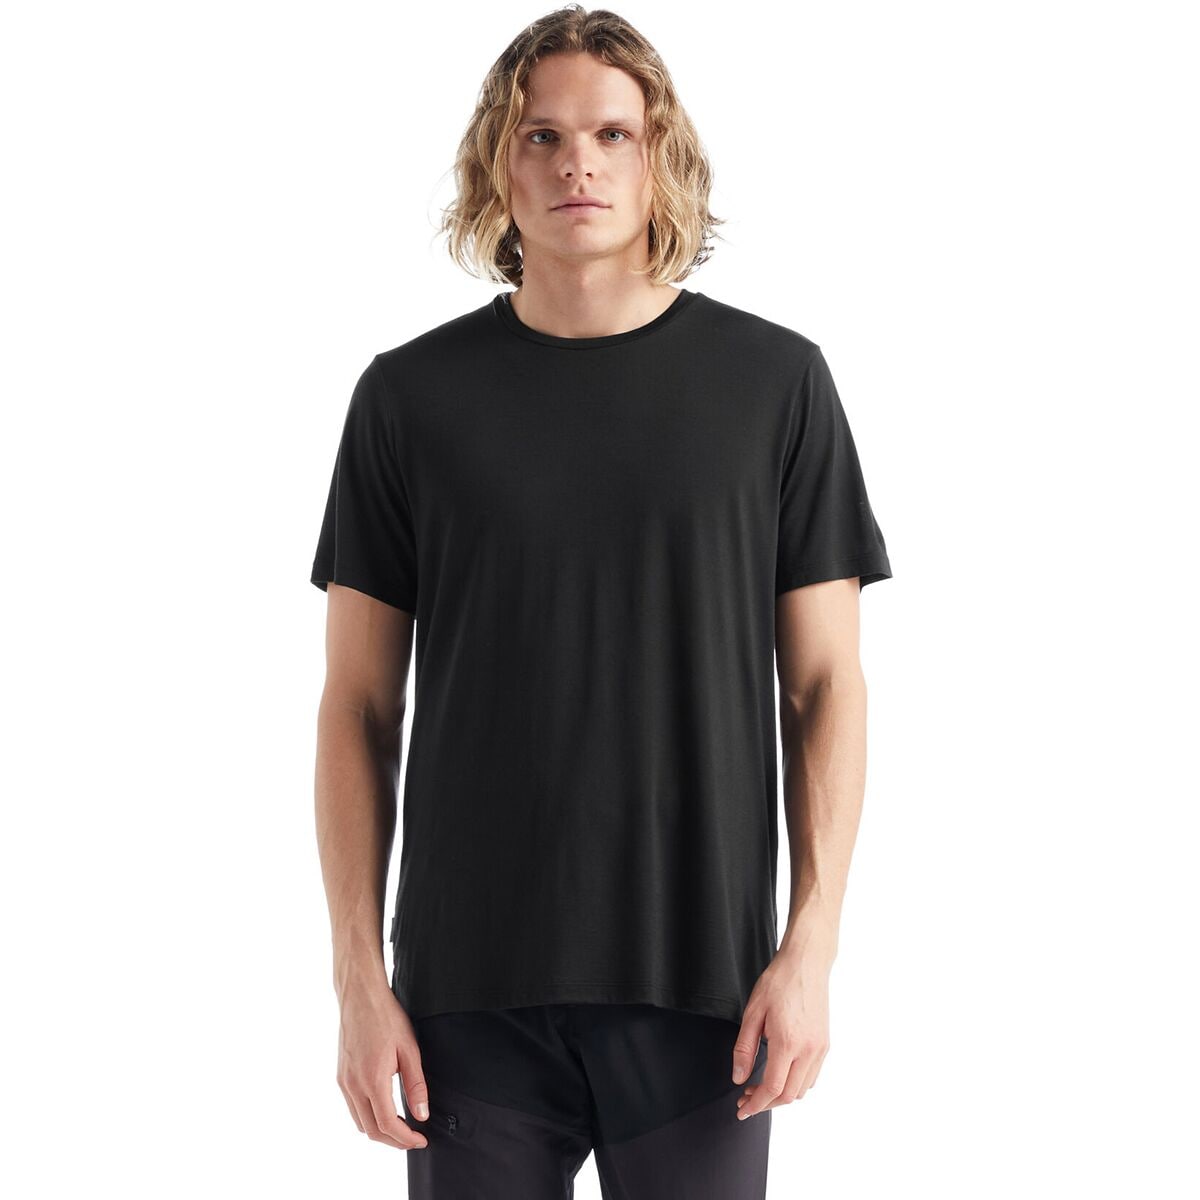 Sphere II Short-Sleeve T-Shirt - Men